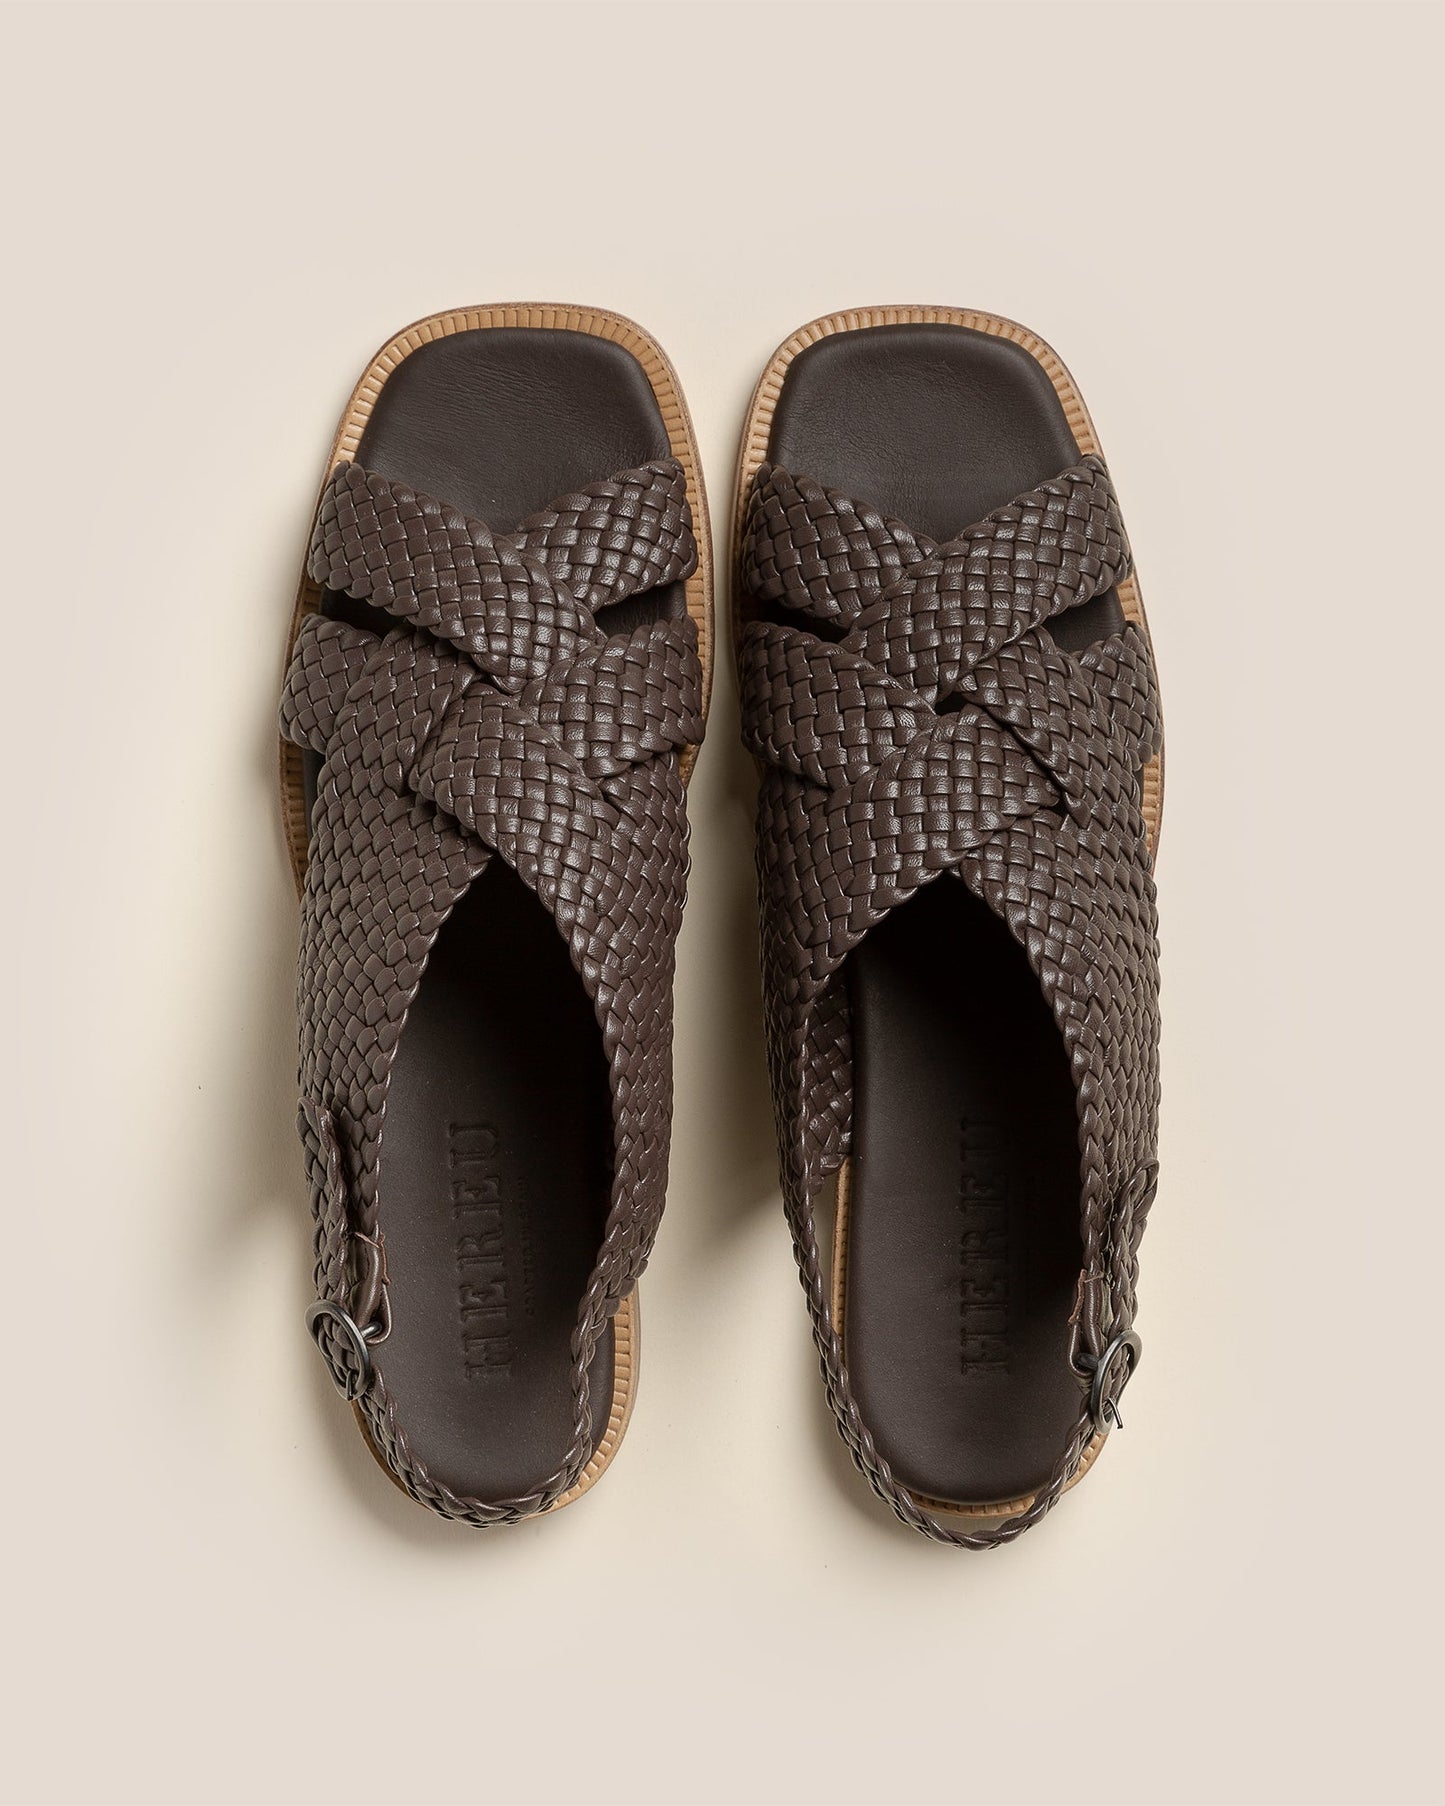 PENYO - Men's Crossover Woven Sandal